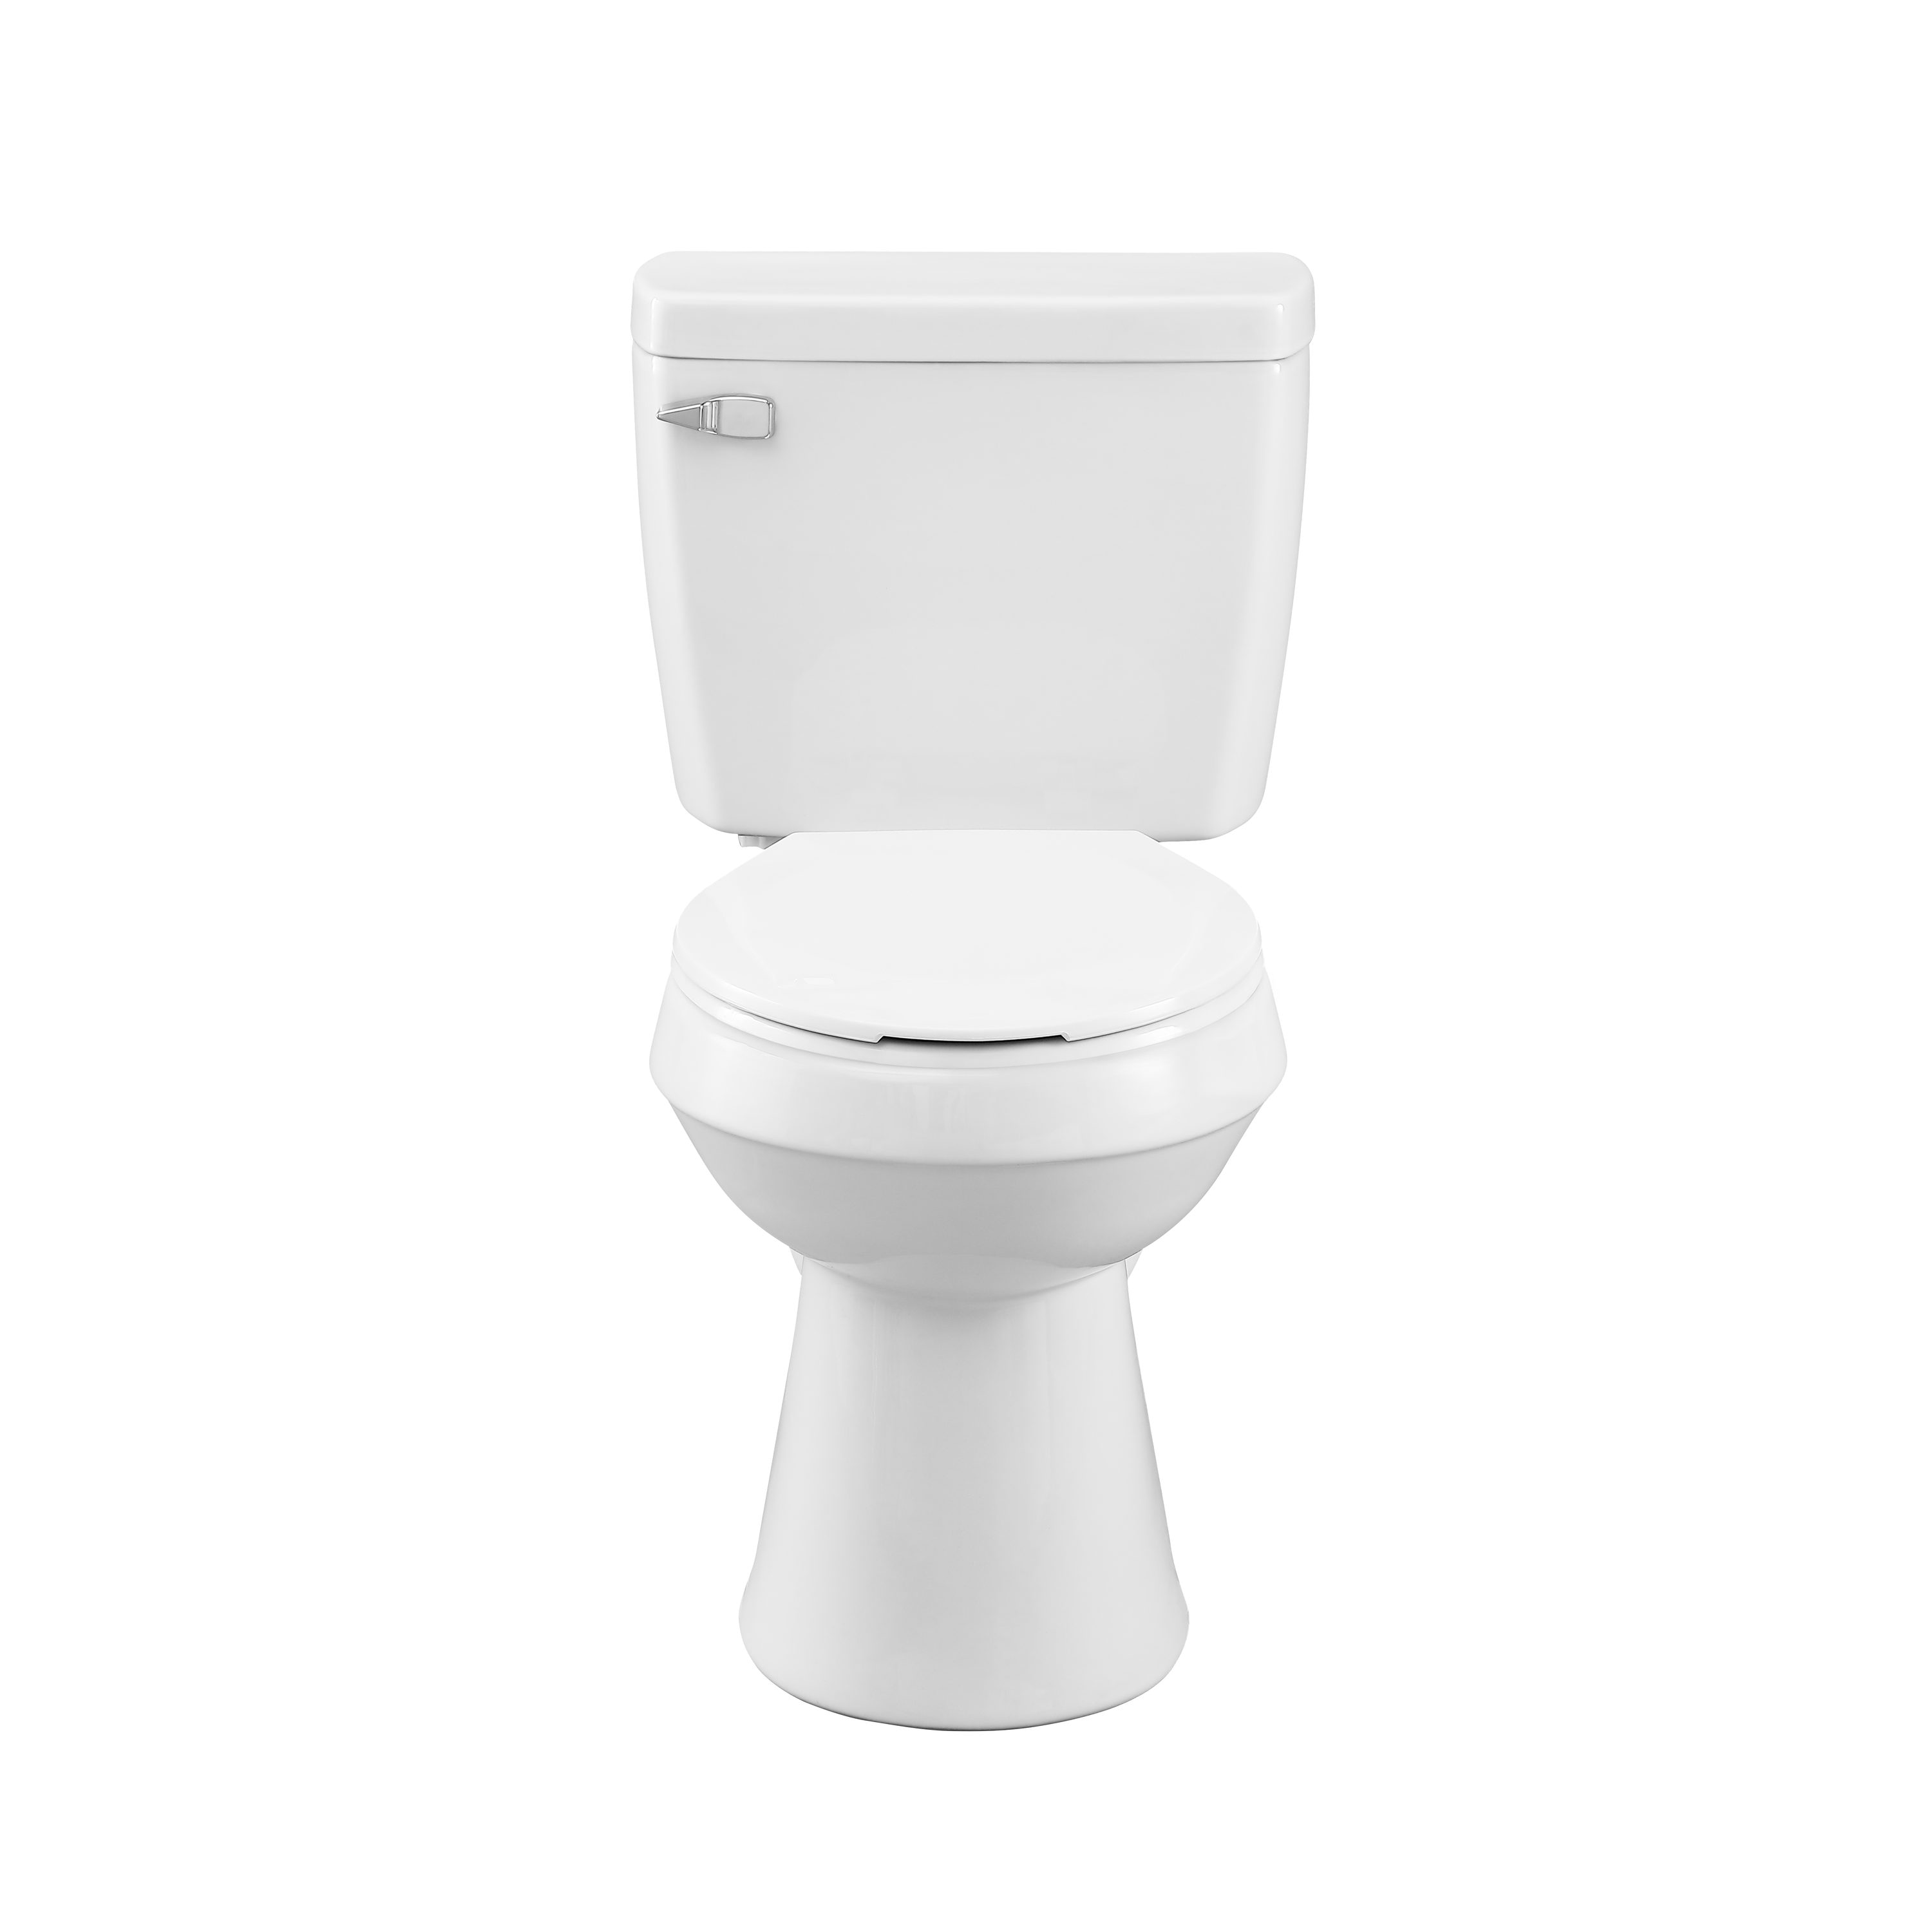 2 pc Toilet Seat Night Light Motion LED 16 Colors Bathroom Toilet Bowl  Light Up